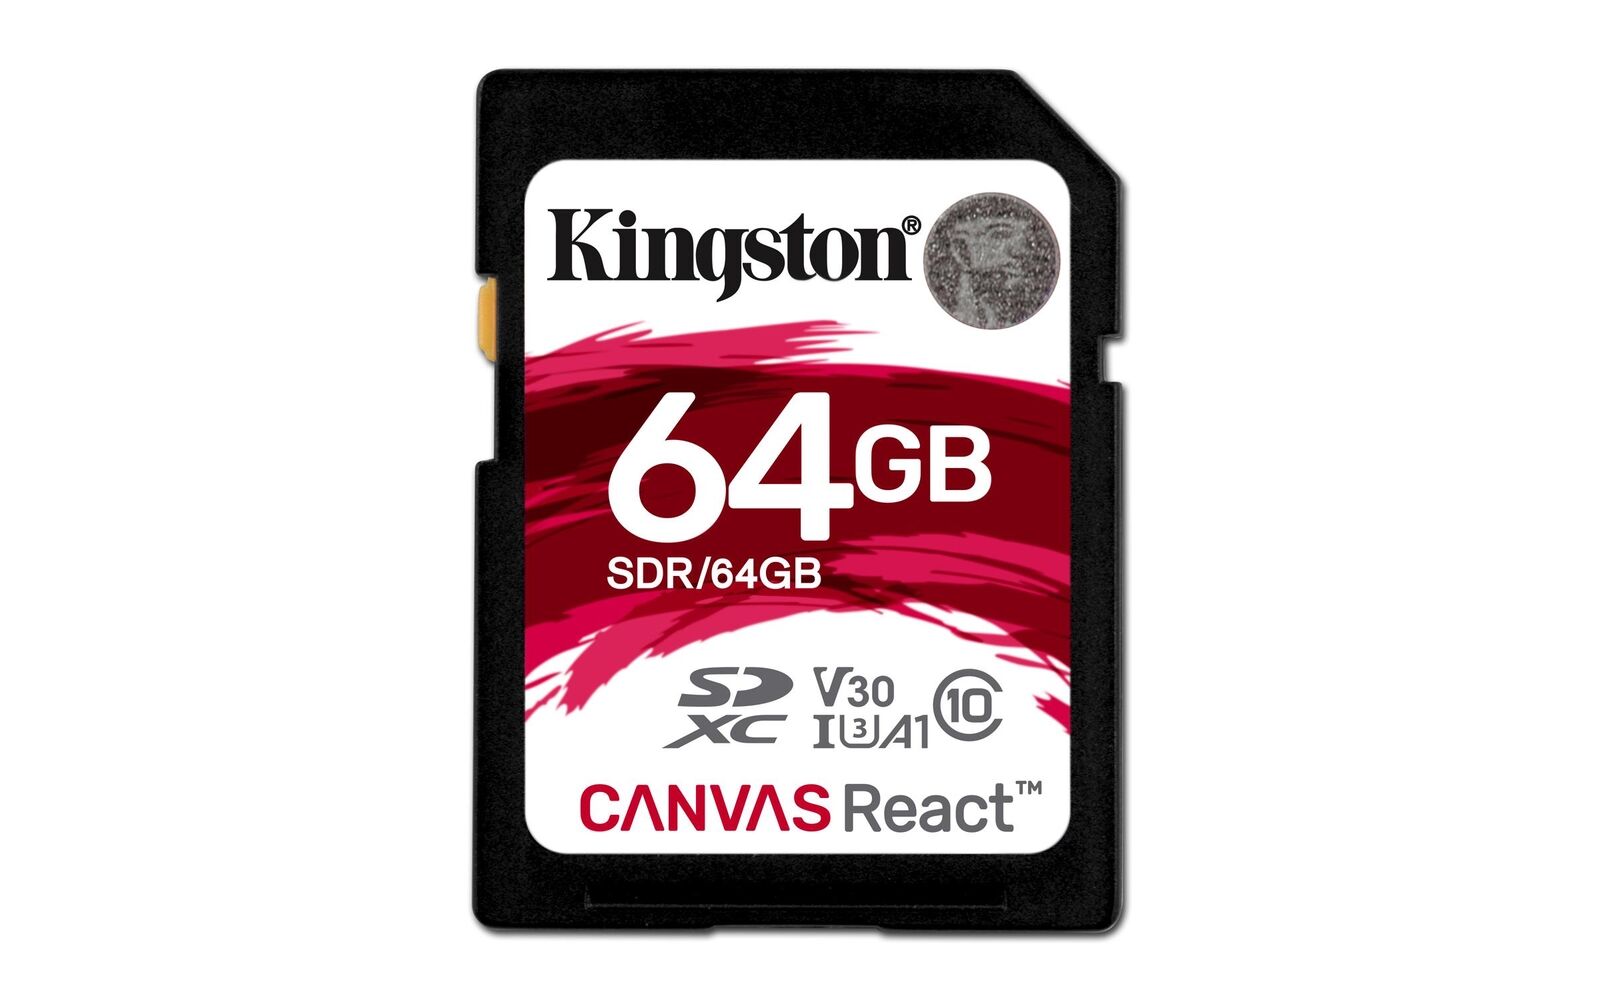 64gb Sdxc Canvas React Kingston Digital Media Product Sdr 64gb 740617275896